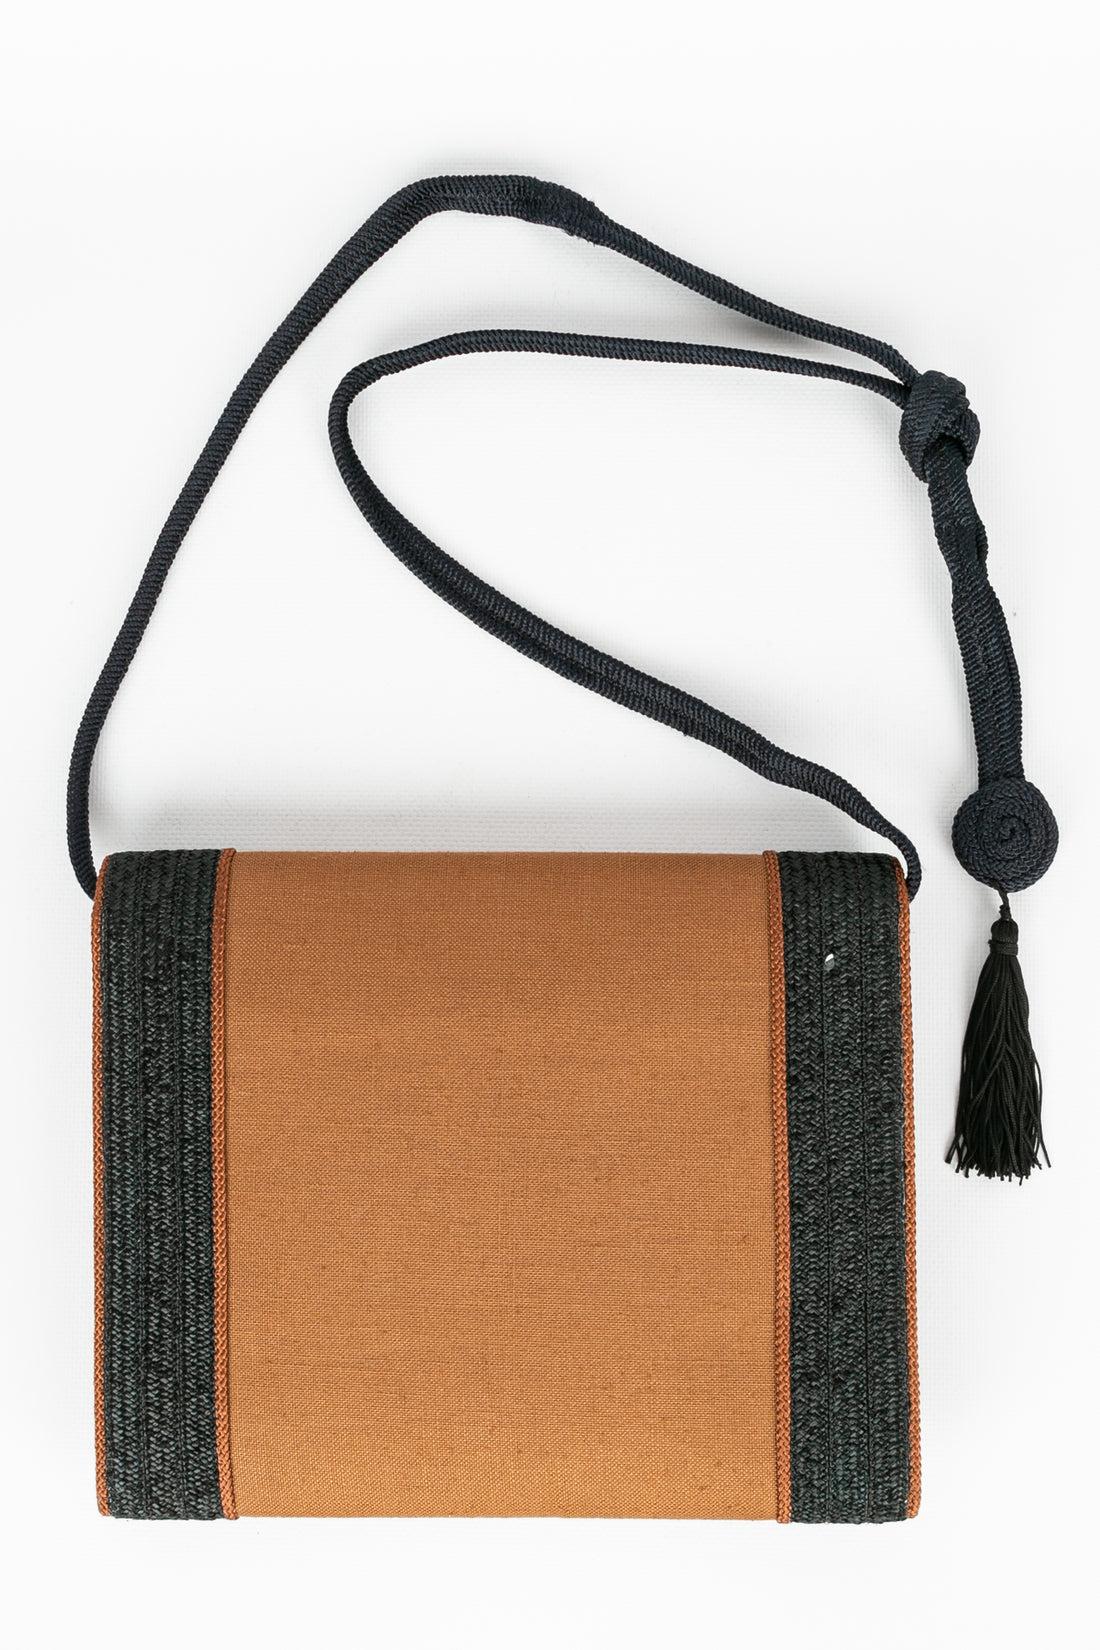 Brown Yves Saint Laurent Shoulder Fabric Bag in Black Suede For Sale